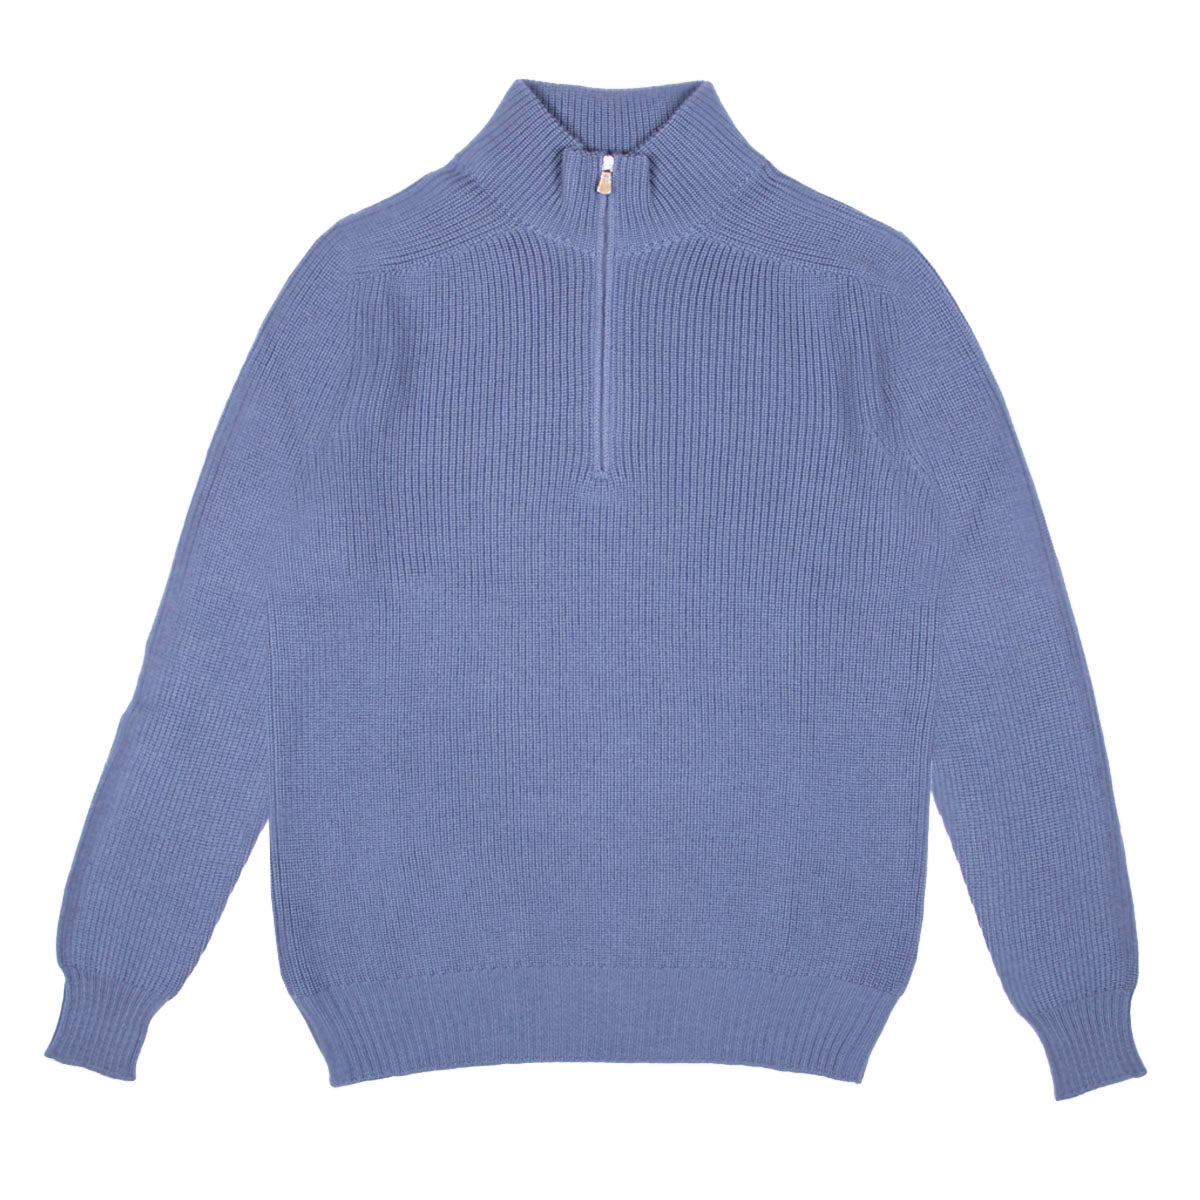 Airforce Blue Rain Wool Ribbed Zip-Neck Sweater  Robert Old   